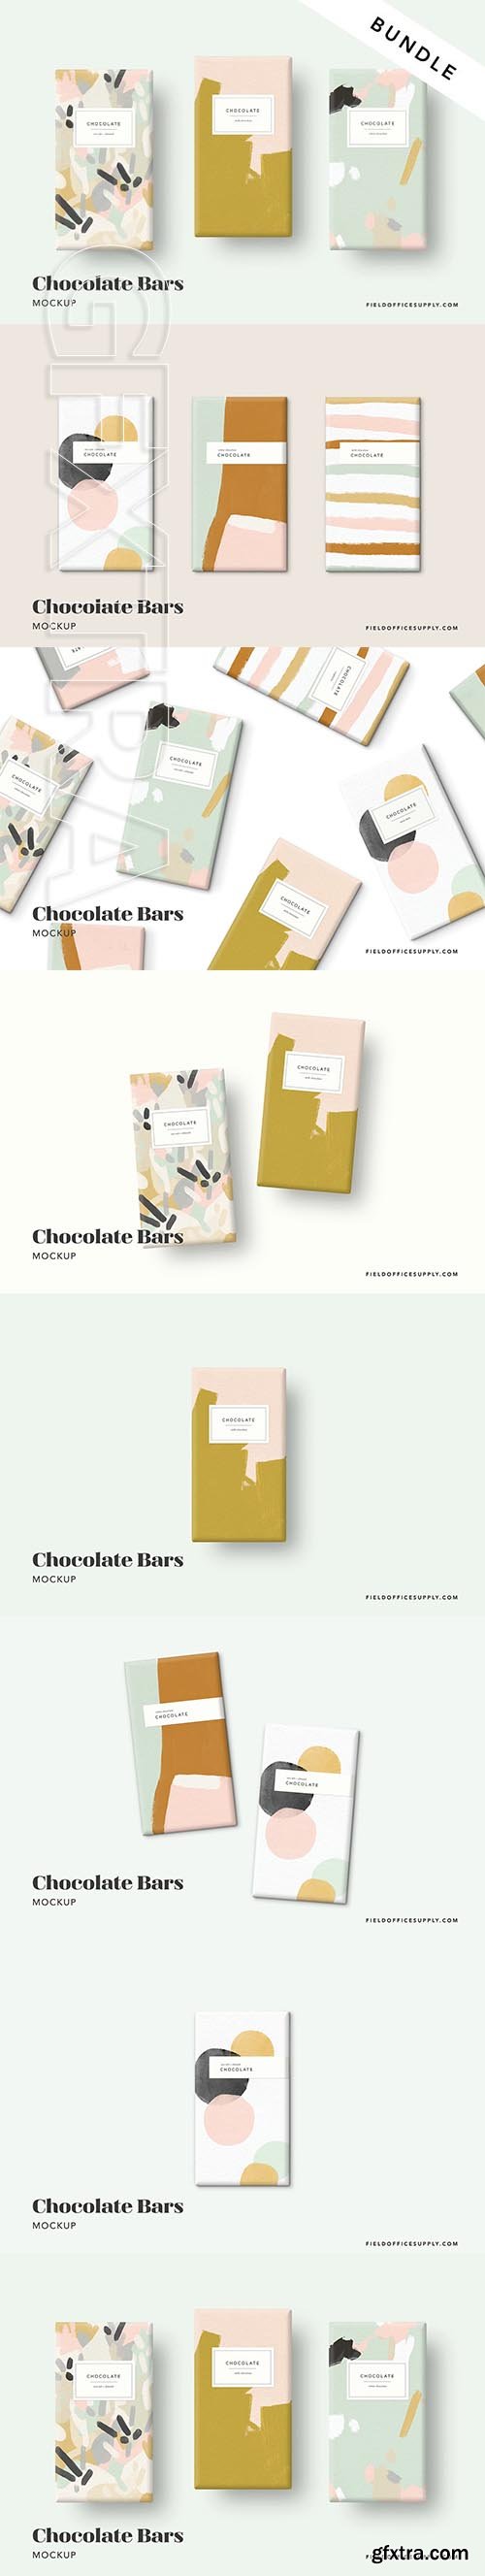 CreativeMarket - Chocolate Bar Mockup Bundle 2775583